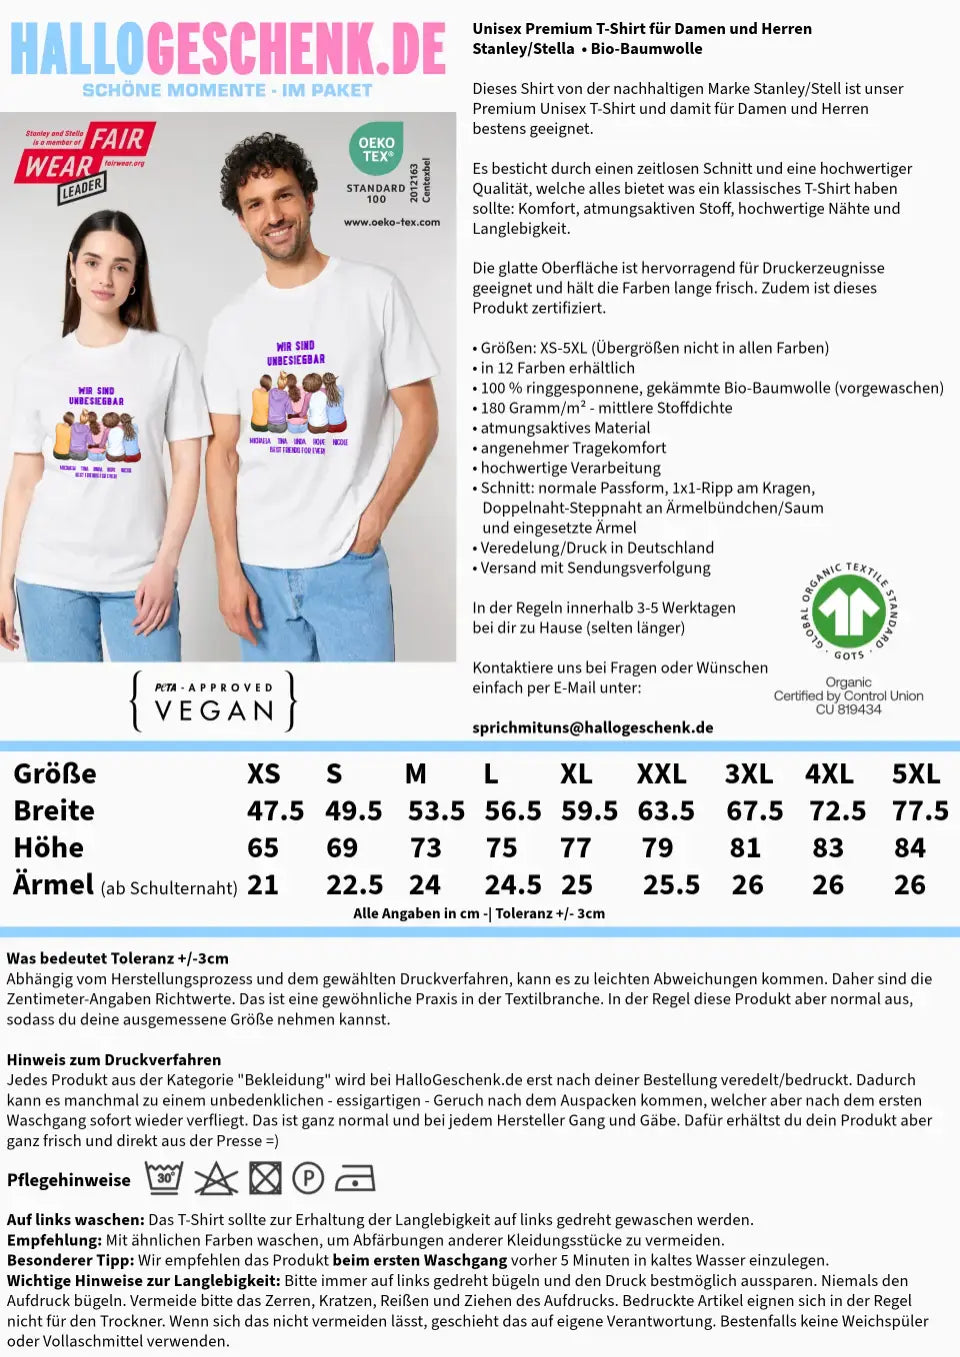 5in1: Design 2-5 girlfriends - Unisex Premium T-Shirt XS-5XL made of organic cotton for women &amp; men